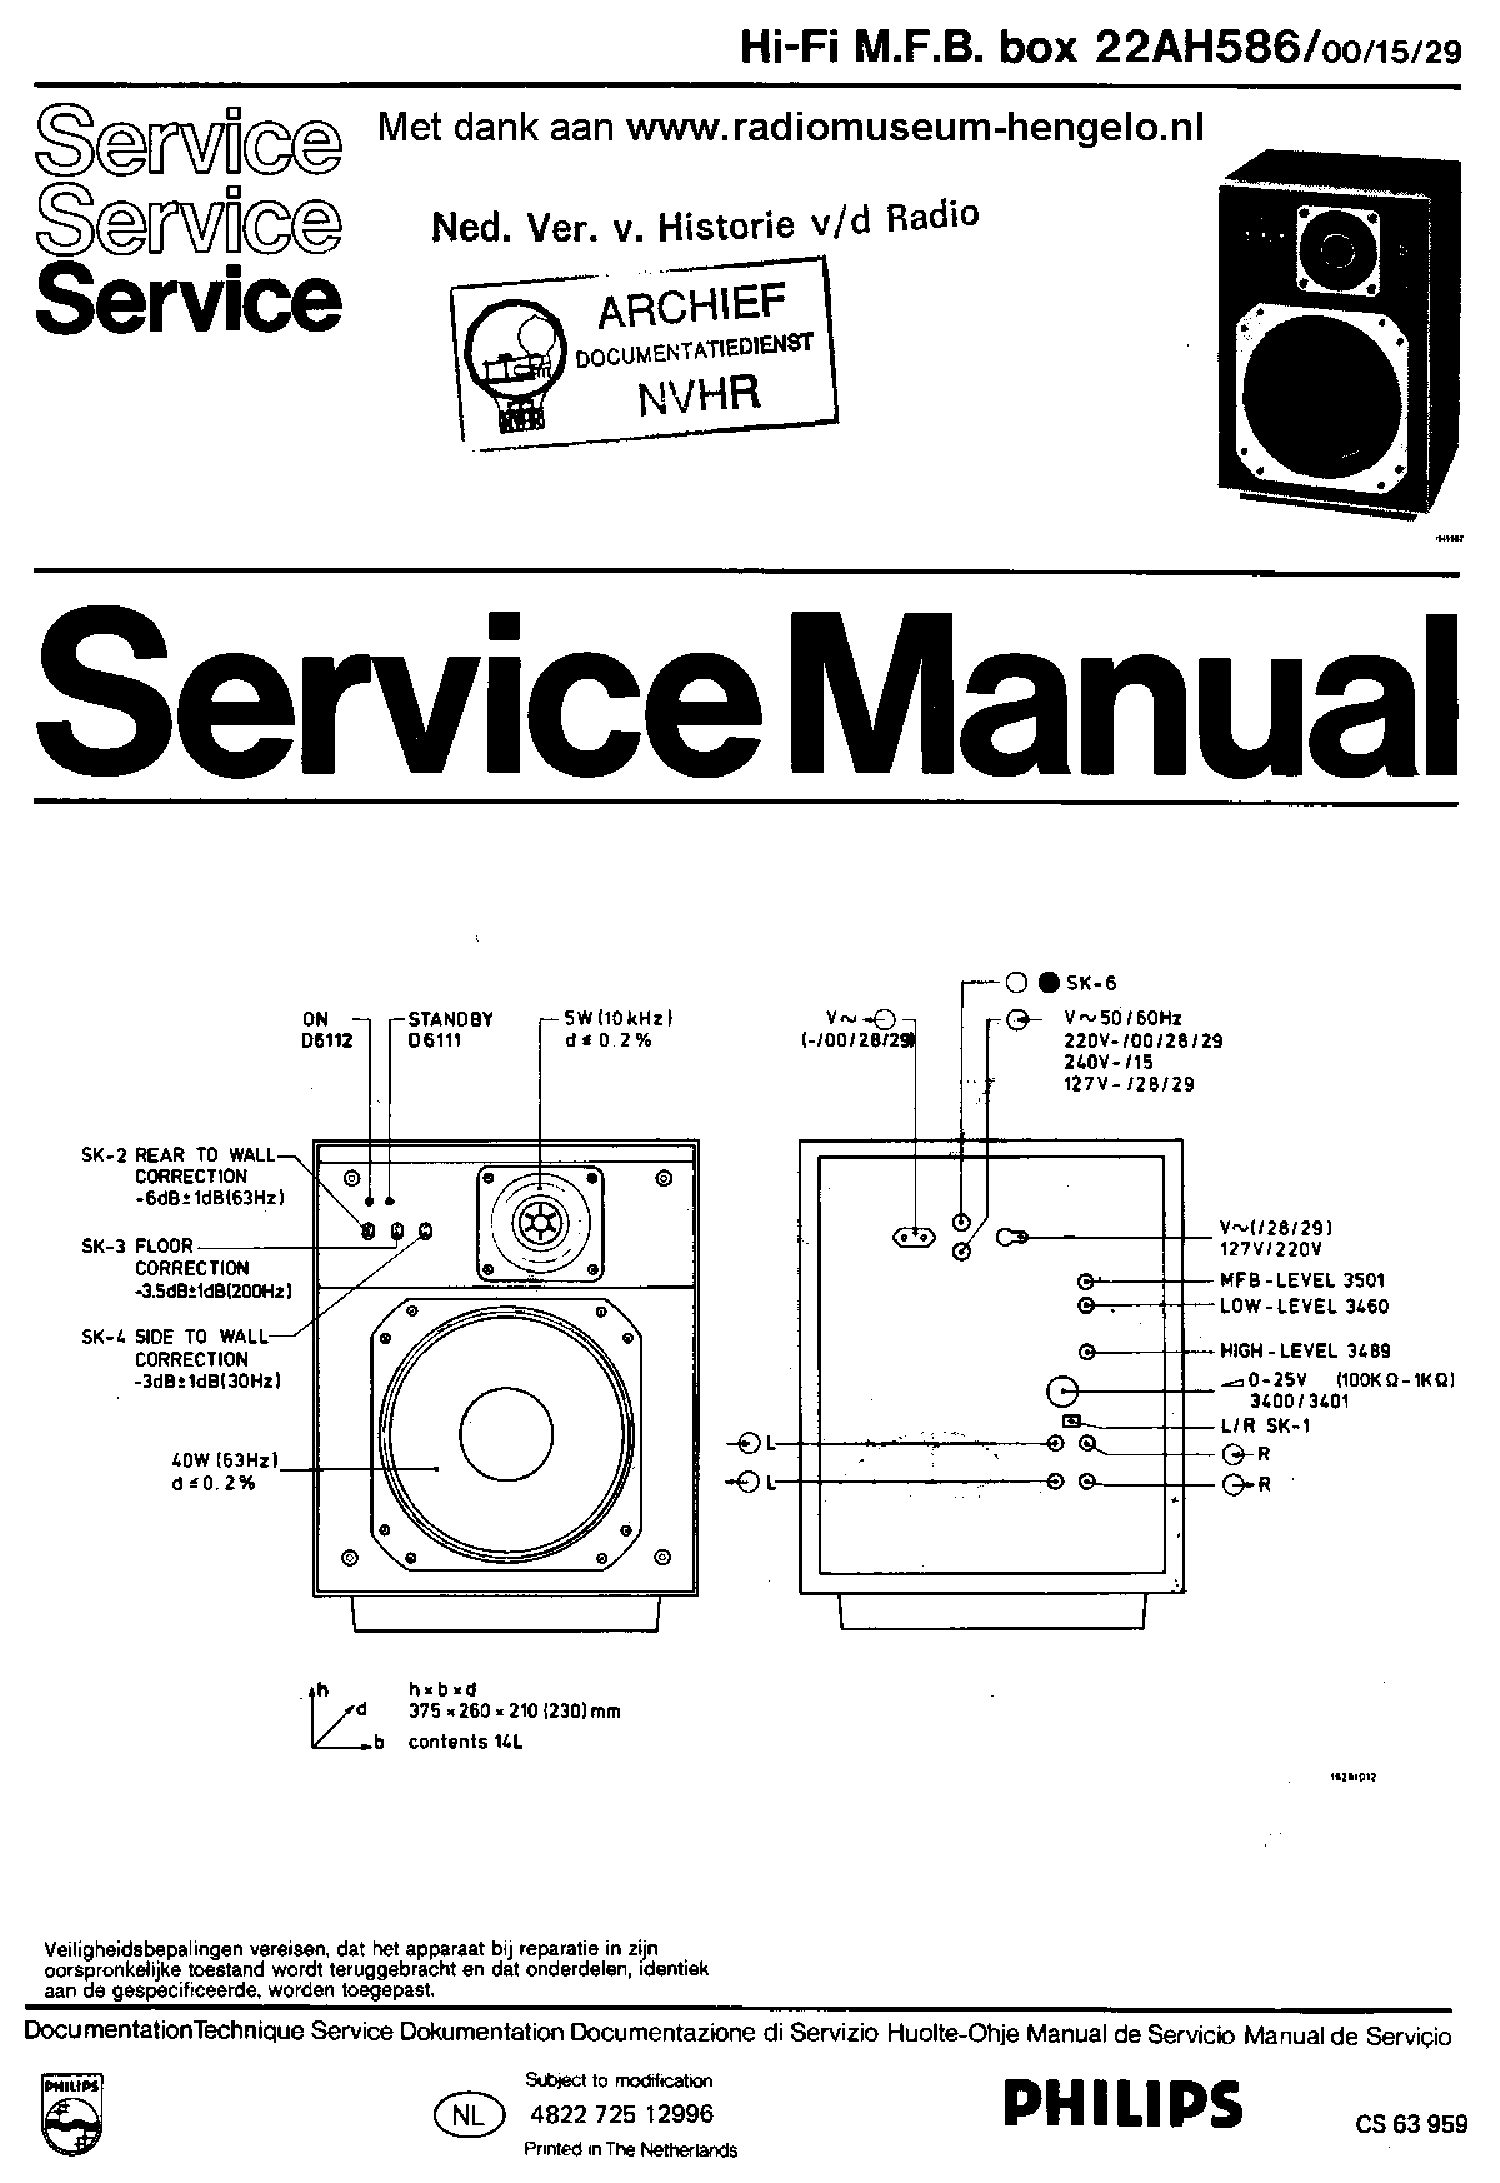 PHILIPS 22AH586-00-15-29 HIFI ACTIVE BOX SM service manual (1st page)